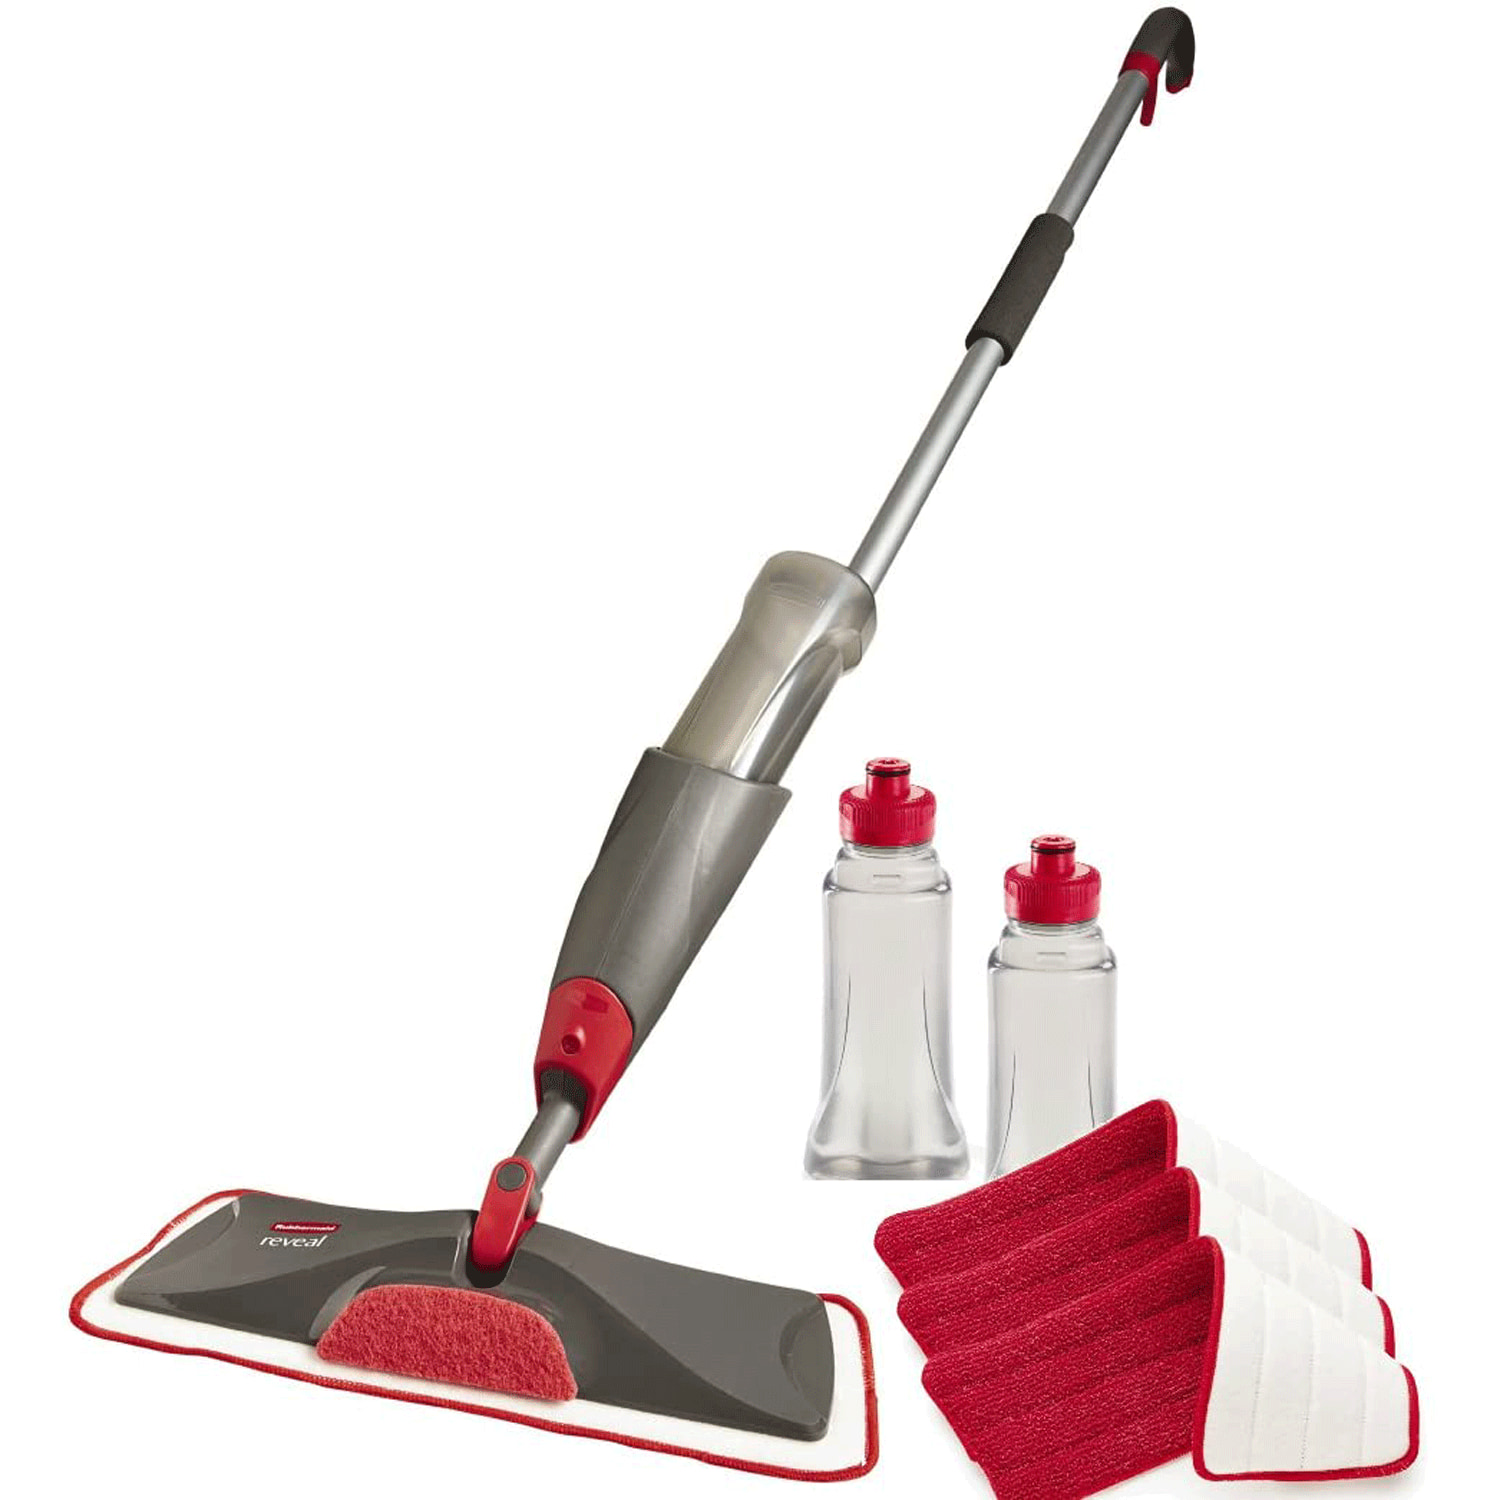  Rubbermaid Reveal Spray Mop Replacement Head, Red, Reusable Wet  Mop Microfiber Pad for Floor Cleaning in Kitchen/Bathroom/Hallway/School :  Health & Household